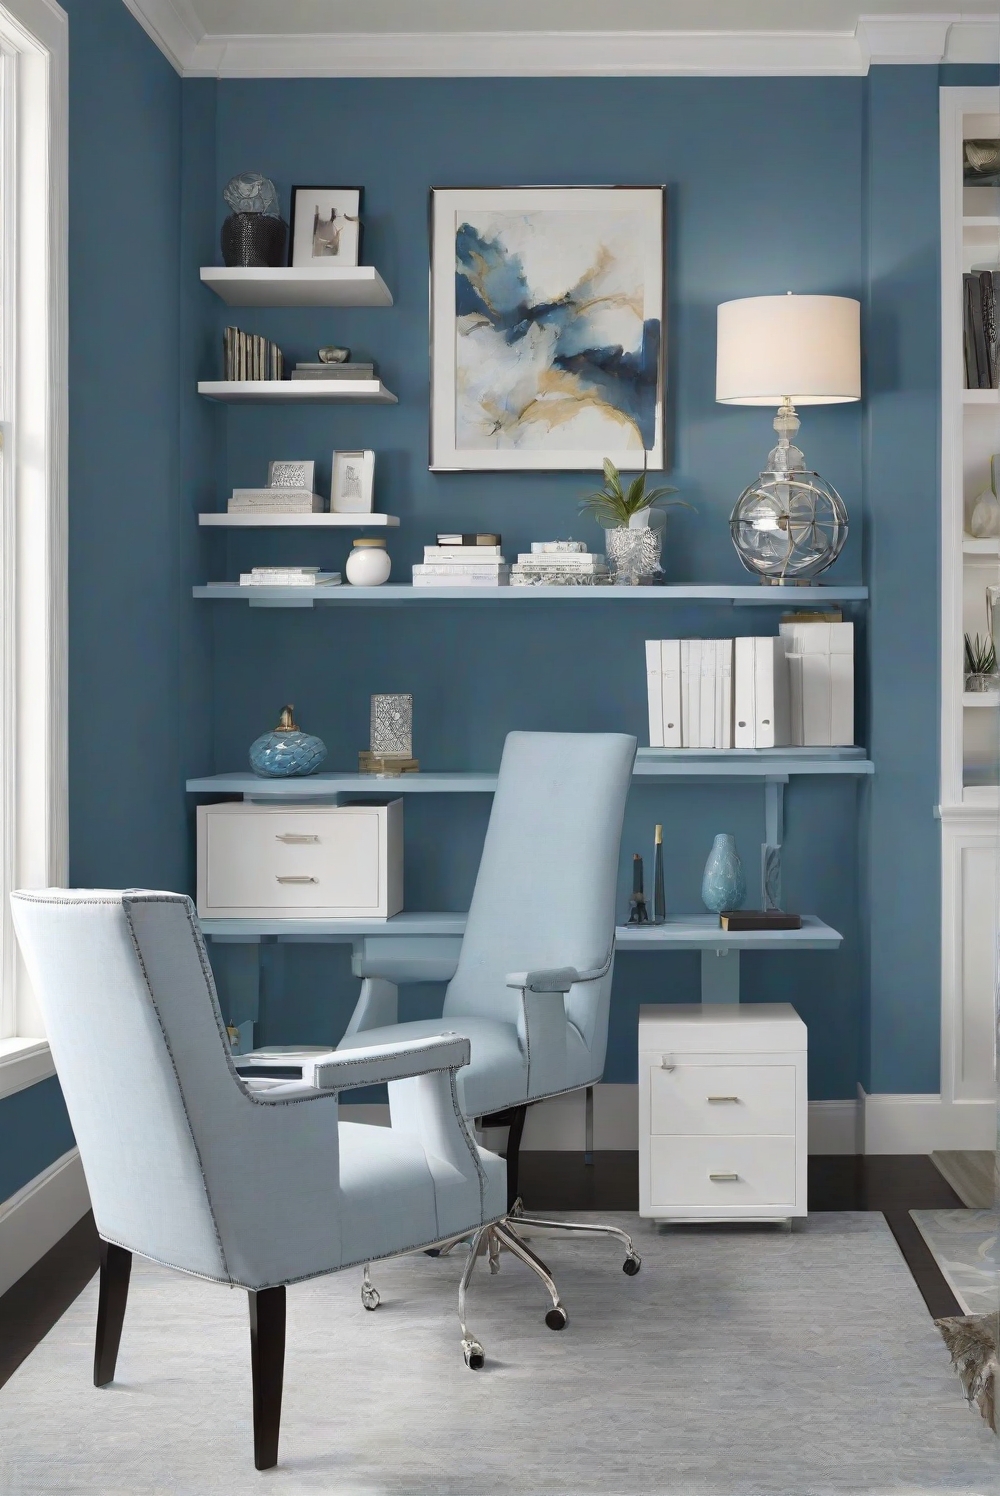 Interior design, home decor, kitchen design, living room interior, wall paint, paint color match, home paint colors